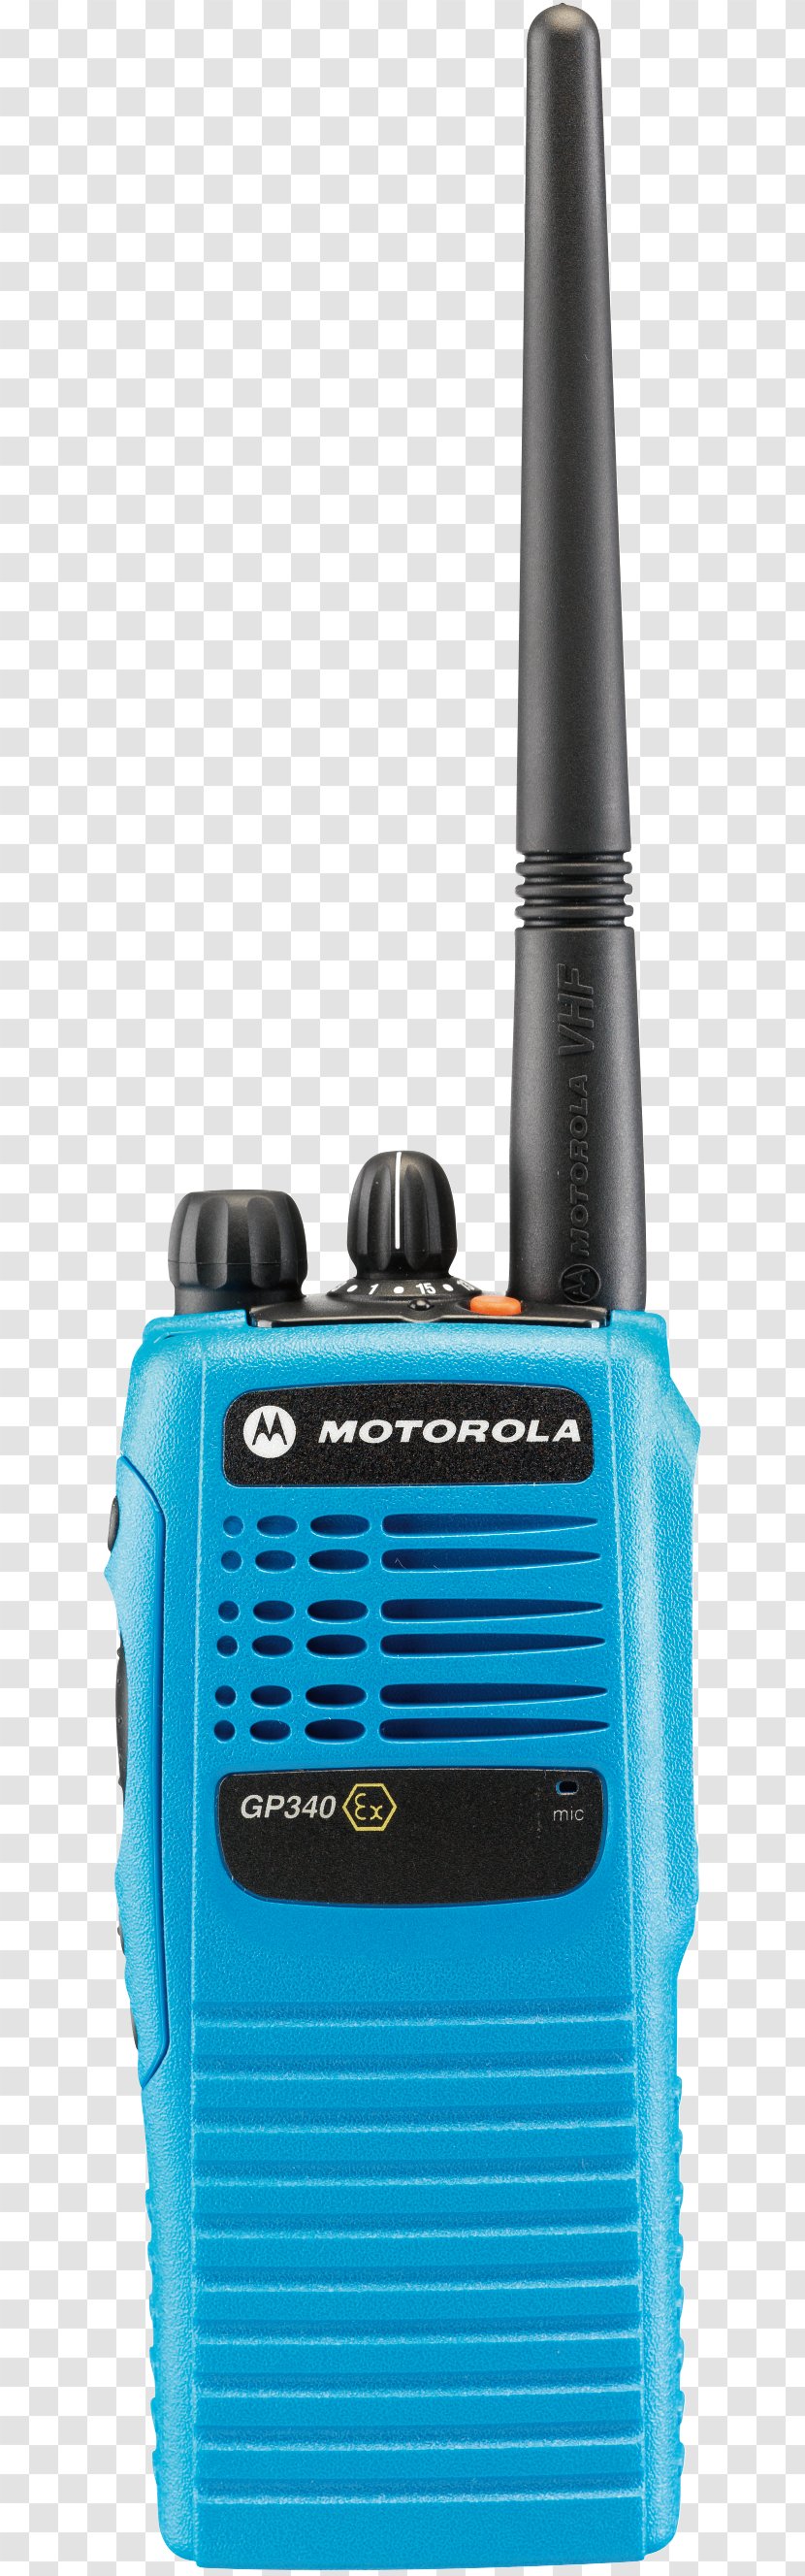 Two-way Radio Walkie-talkie Motorola ATEX Directive - Cylinder Transparent PNG